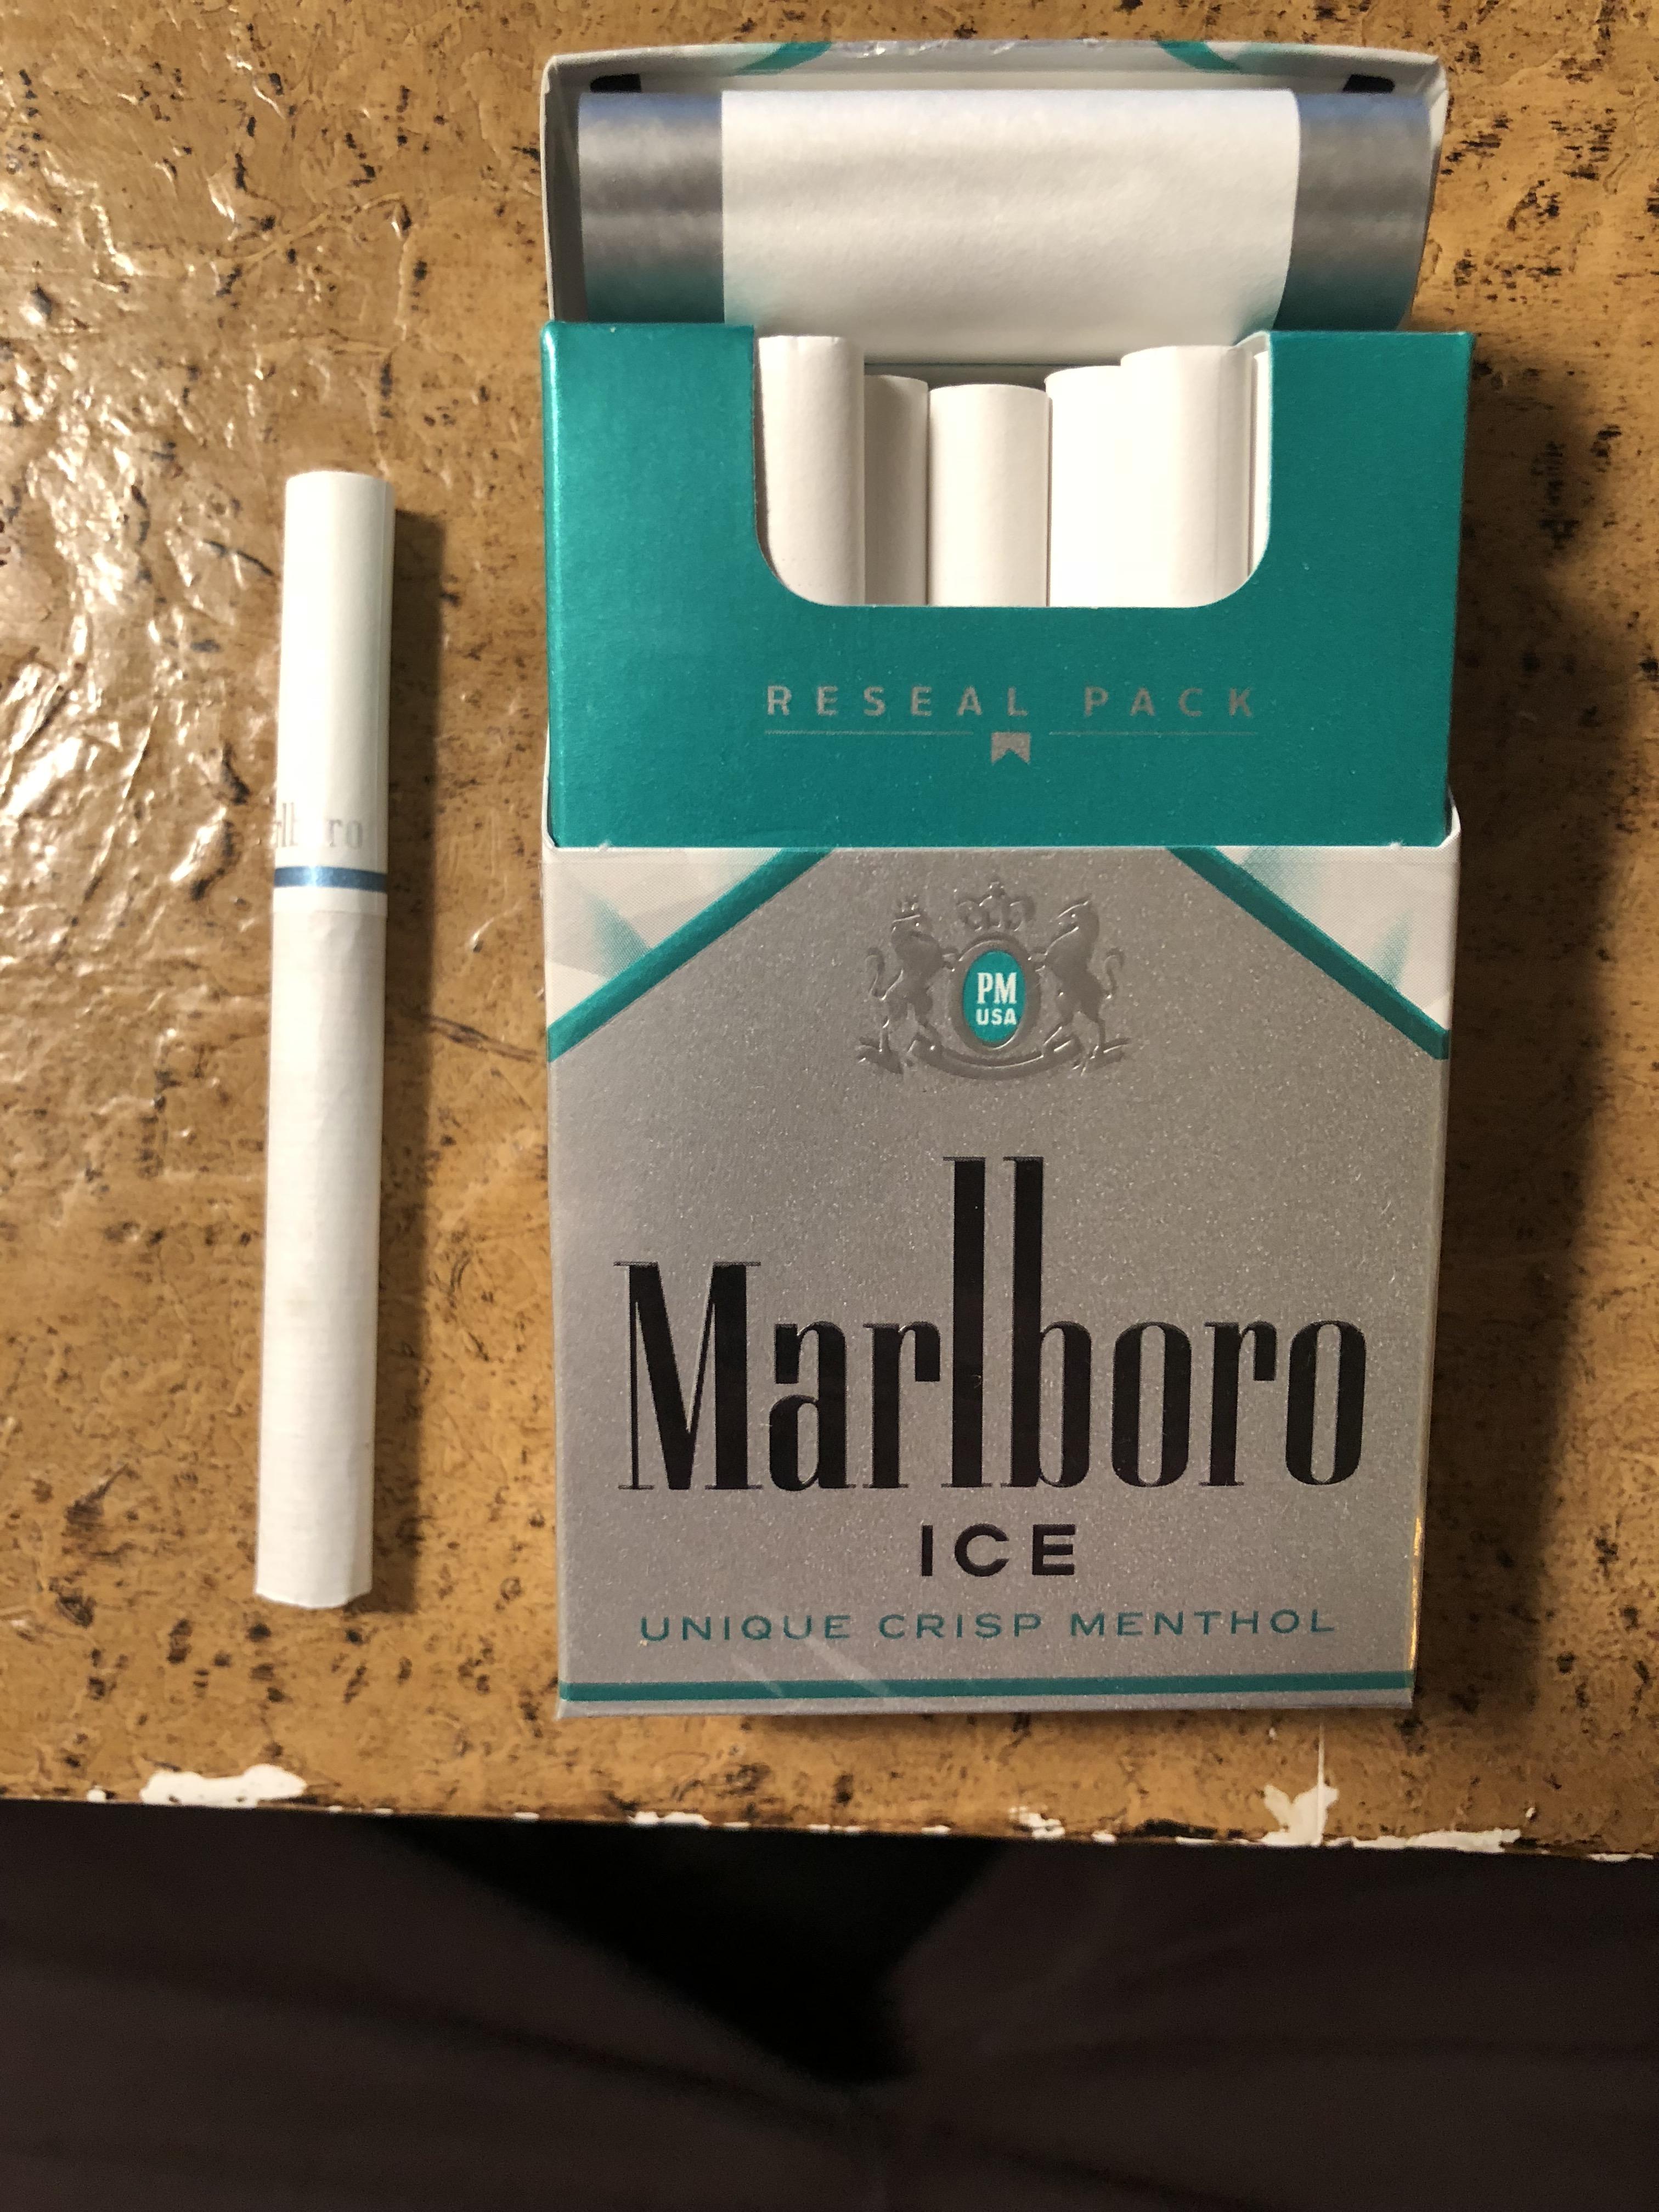 Marlboro ice cigarettes